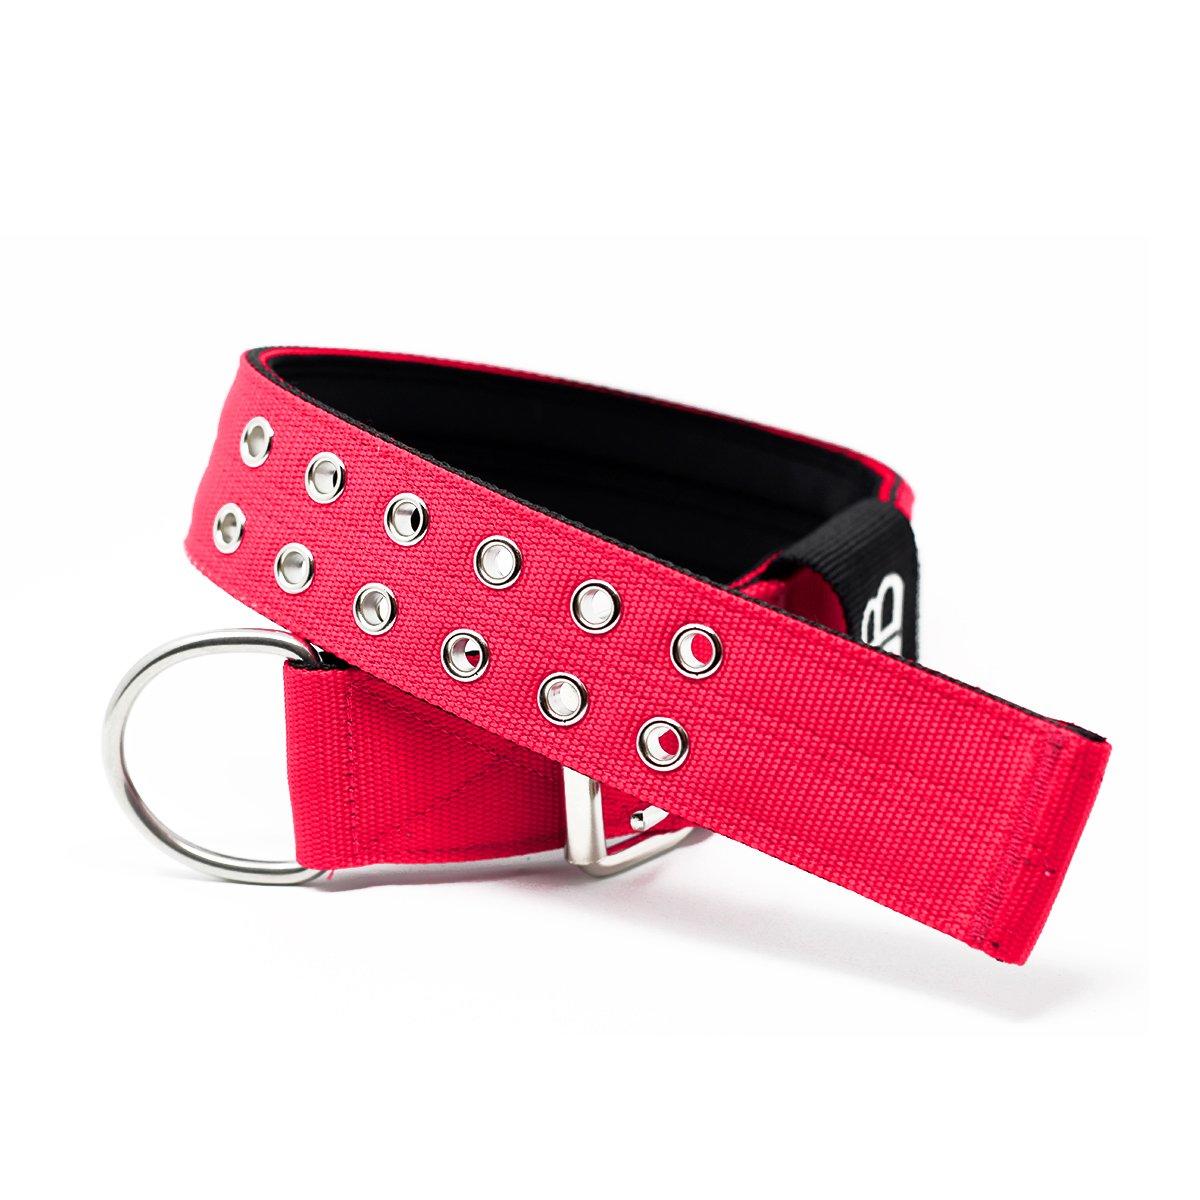 5cm Sporting Collar - Red